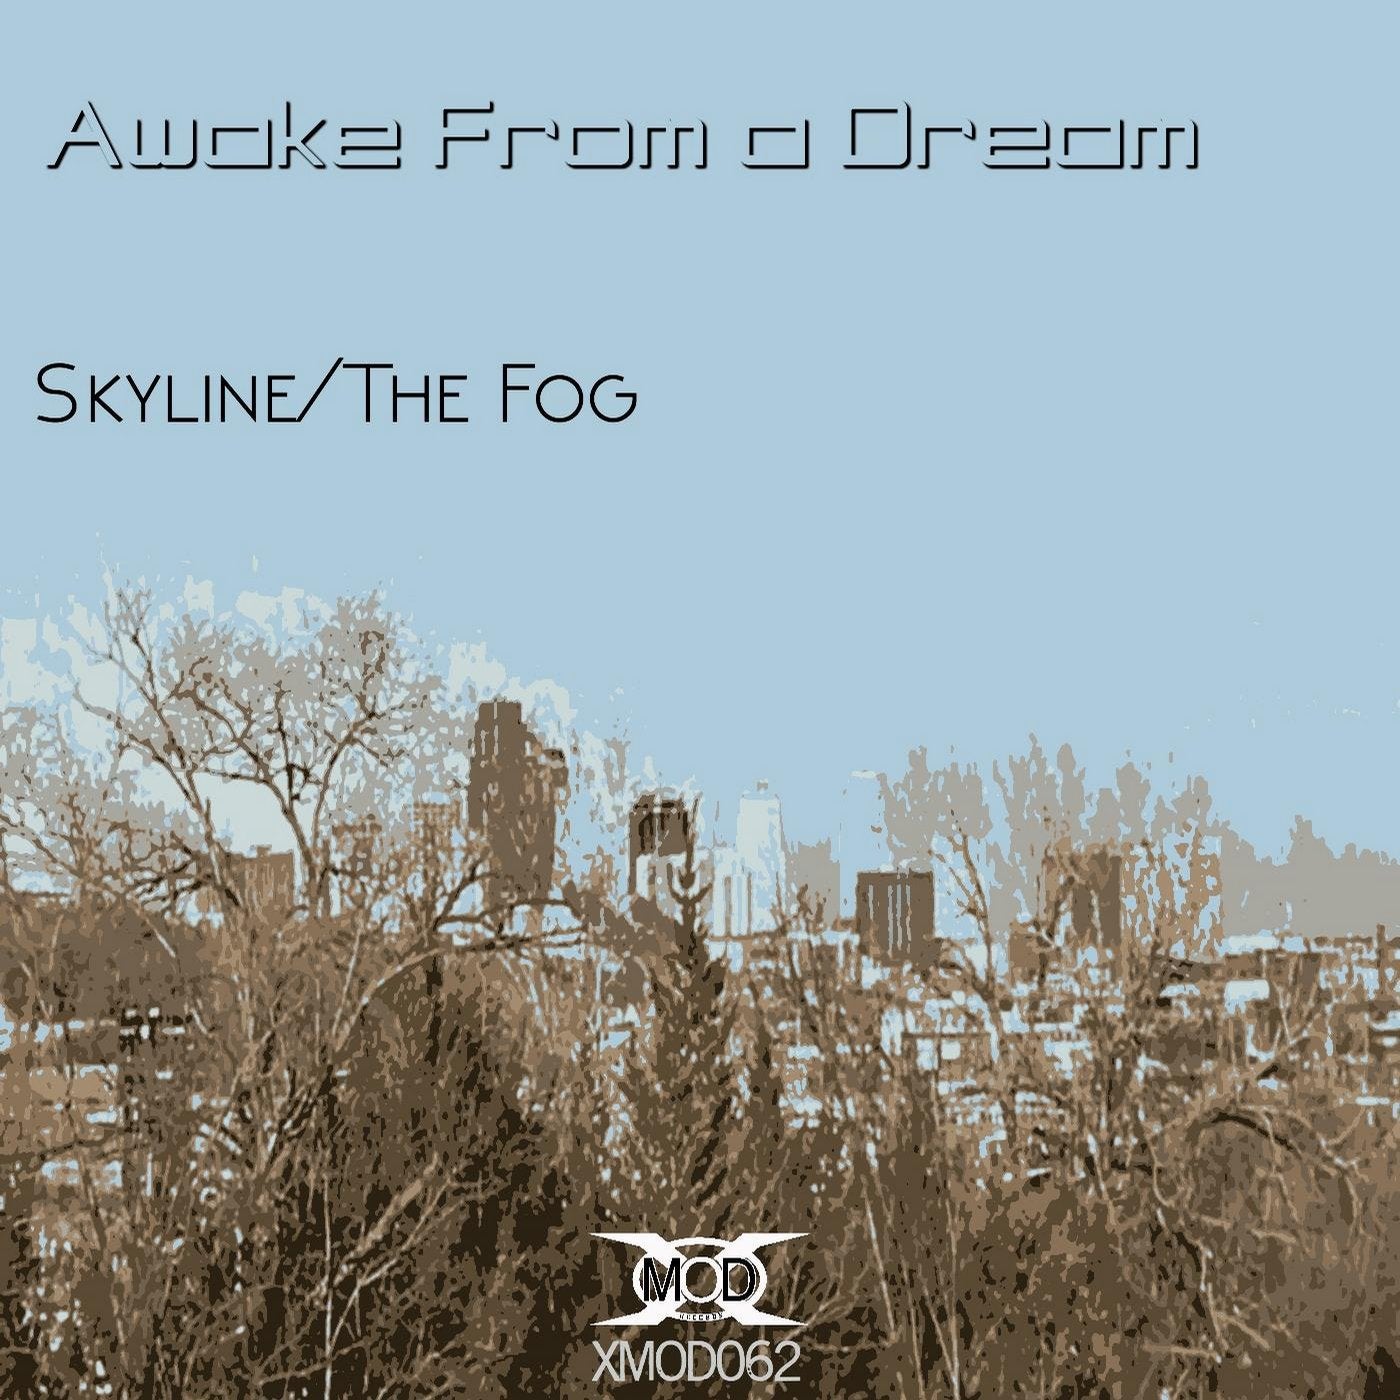 Skyline/The Fog